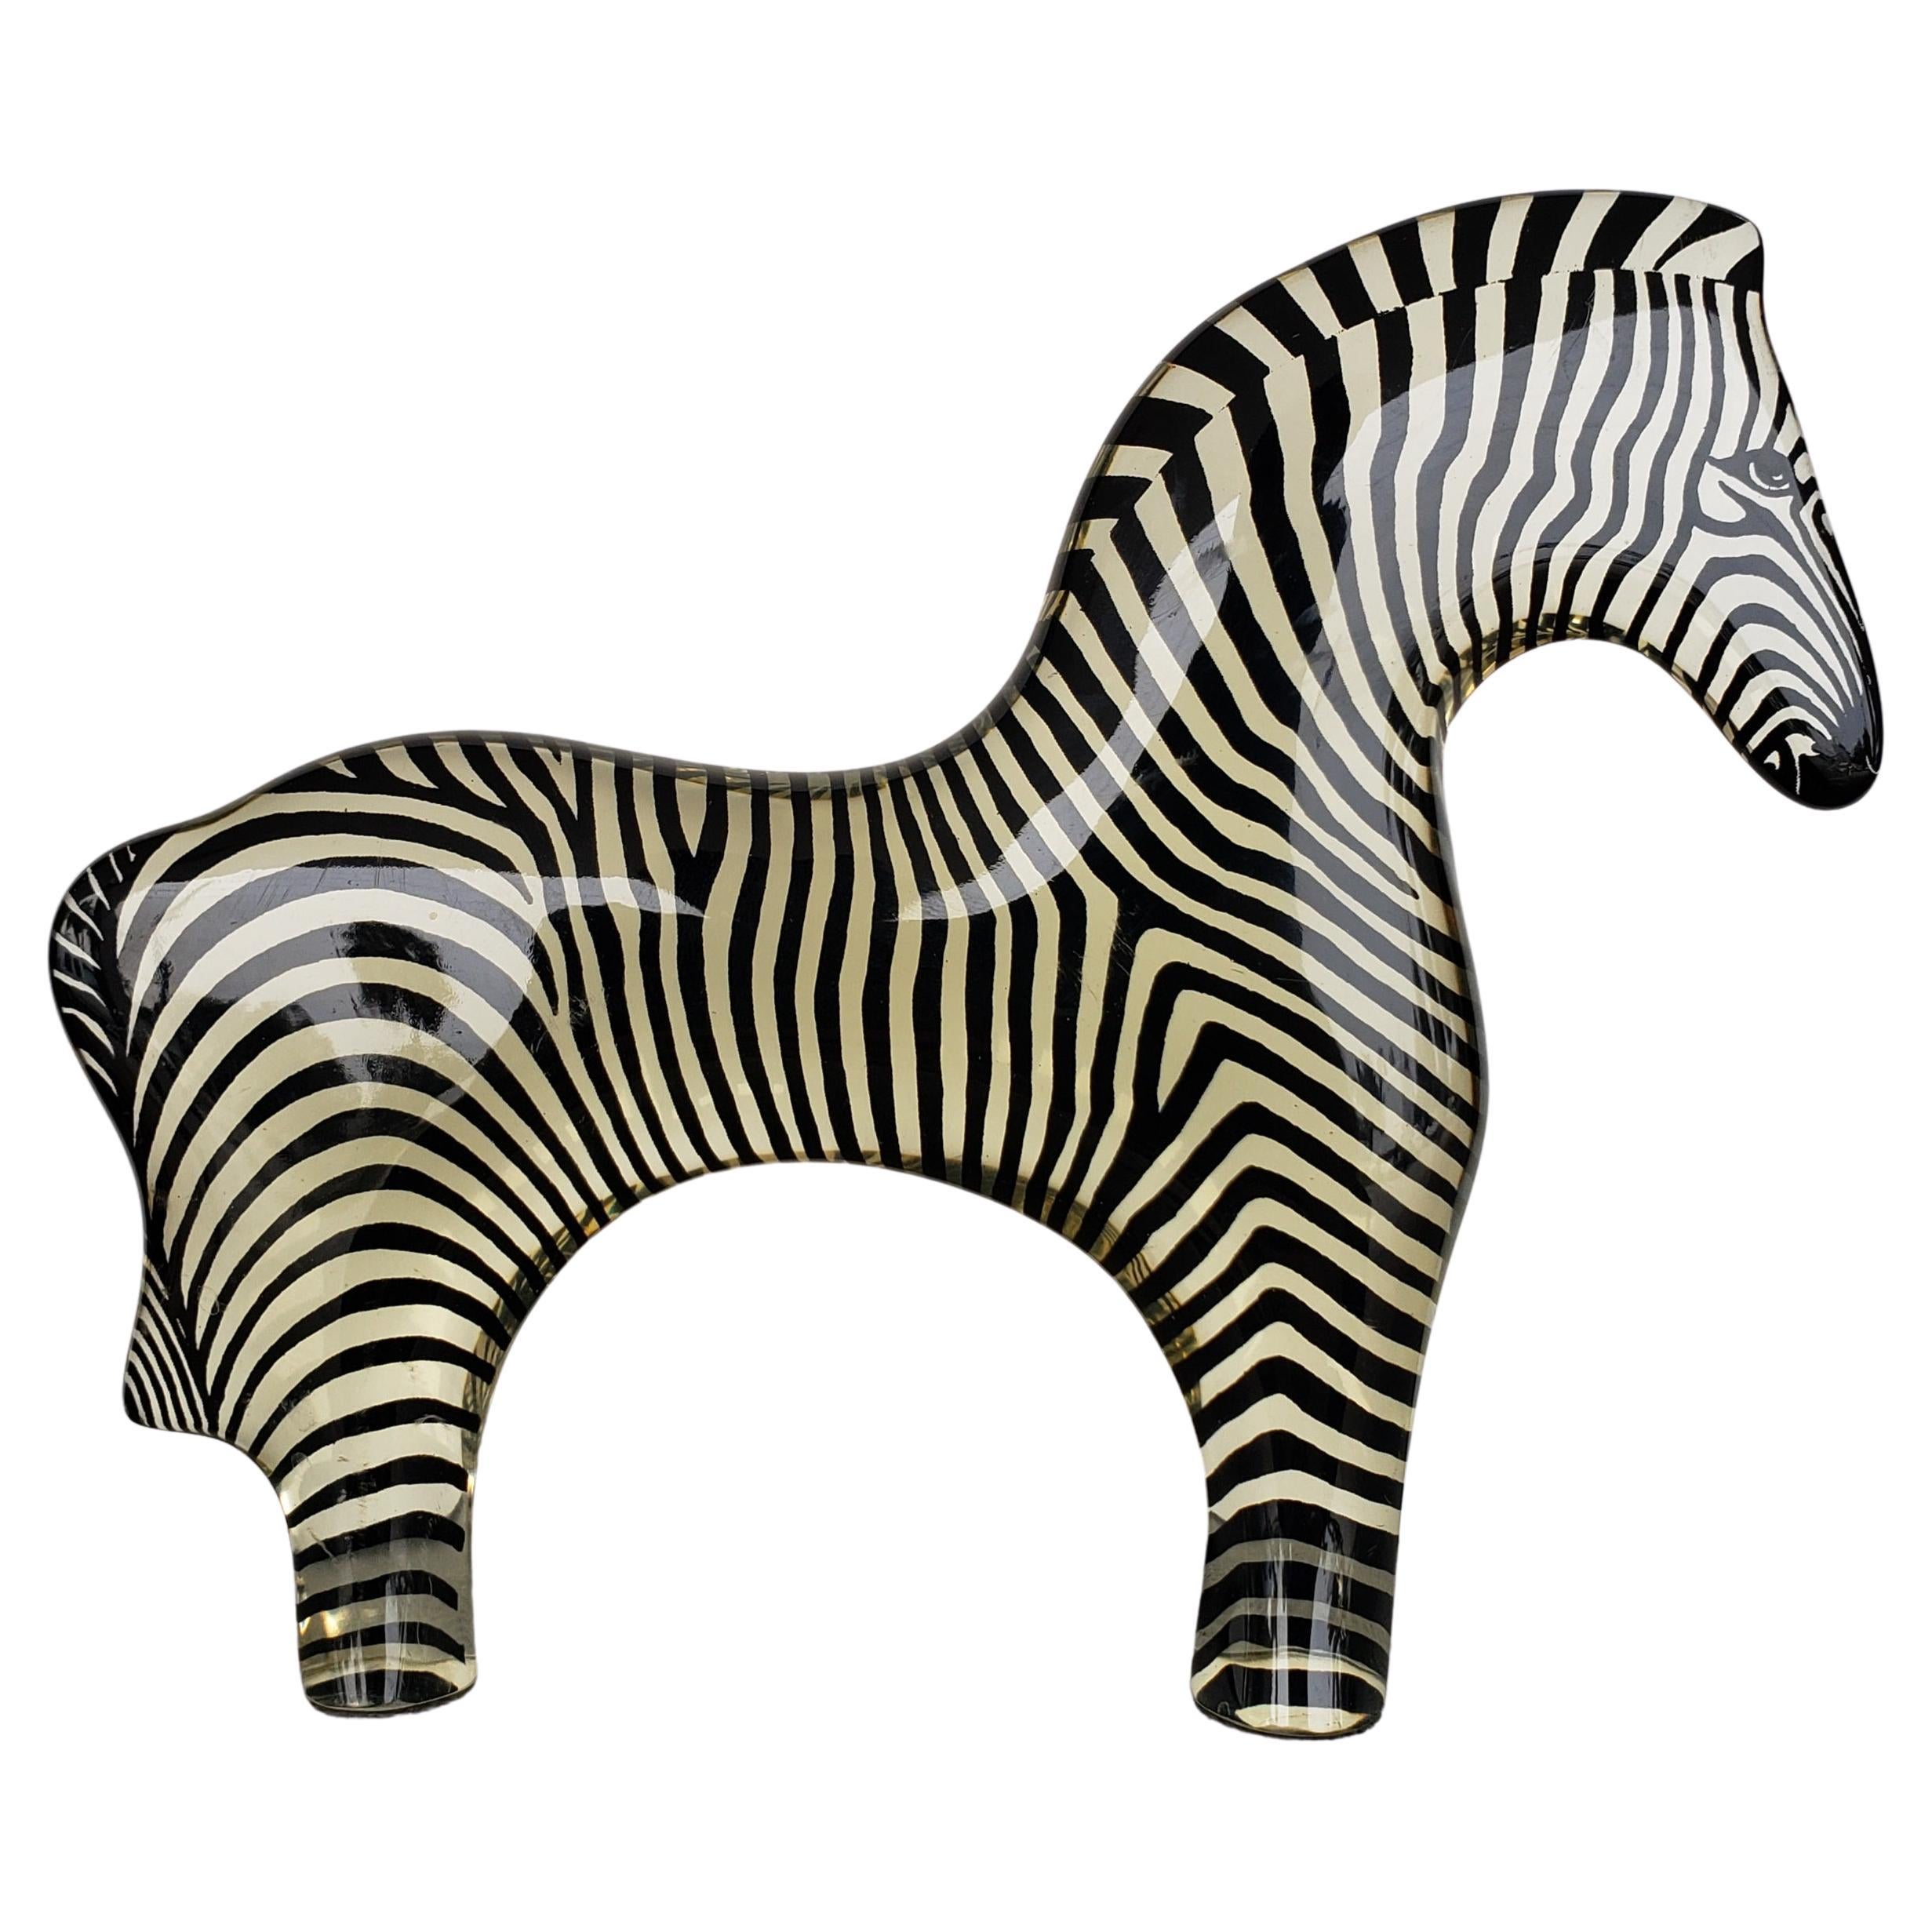 Mid 20th century Abraham Palatnik Brazil Lucite Zebra Op Art Animal Sculpture  For Sale